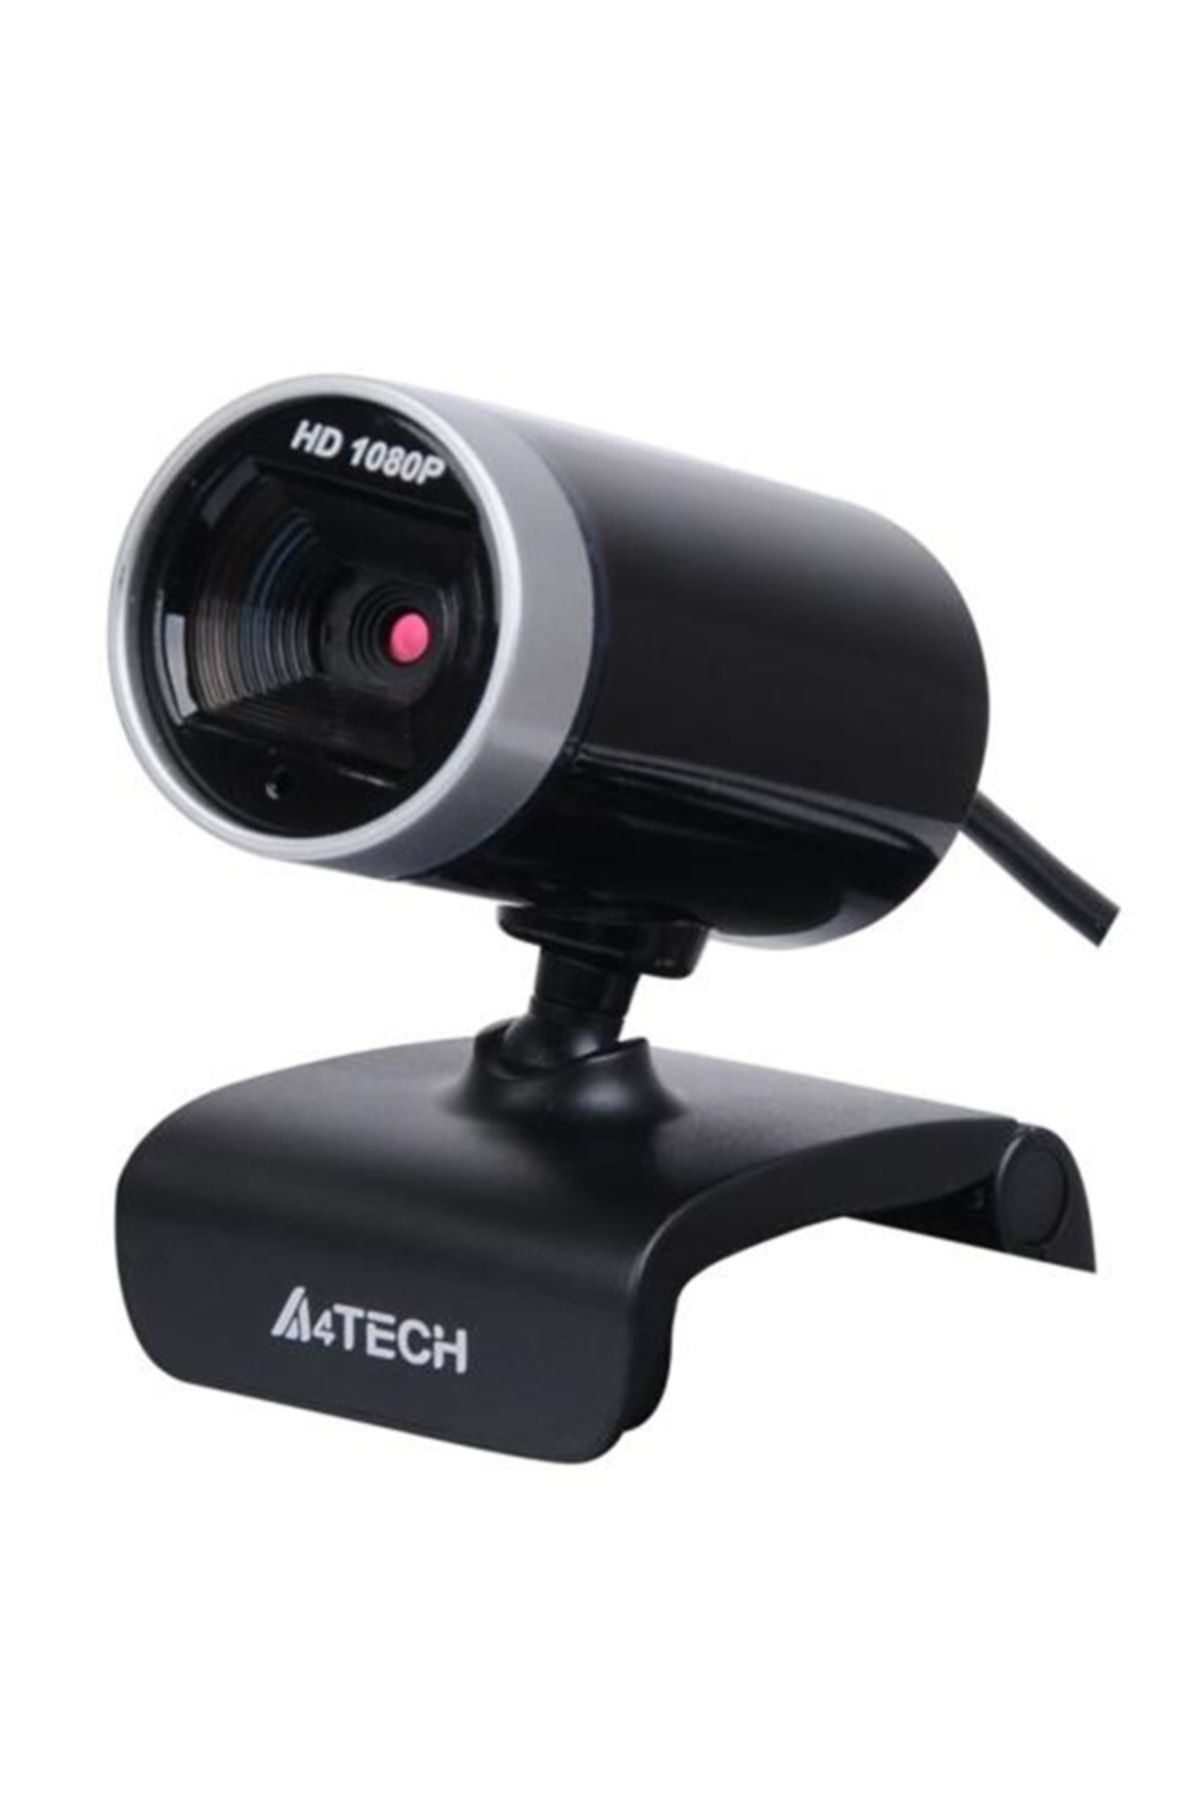 A4 Tech Pk910h 1080p Full Hd Web Kamera Anti-glare